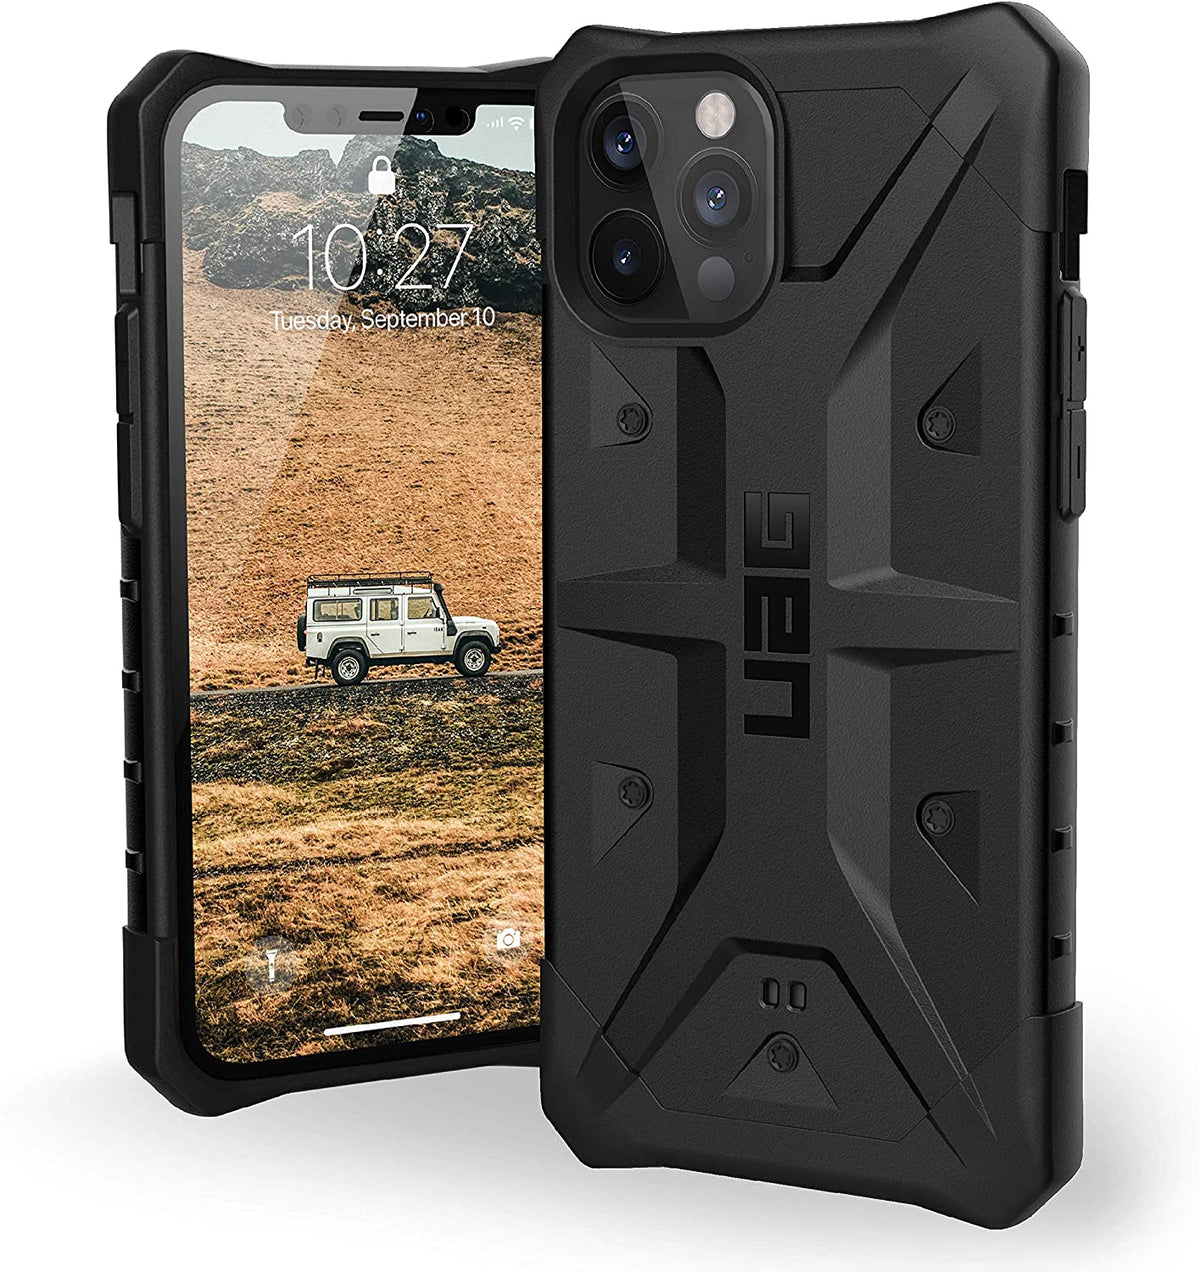 UAG Pathfinder iPhone 12 / Pro / Pro Max / Mini Rugged Lightweight Slim Shockproof Protective Cover Black